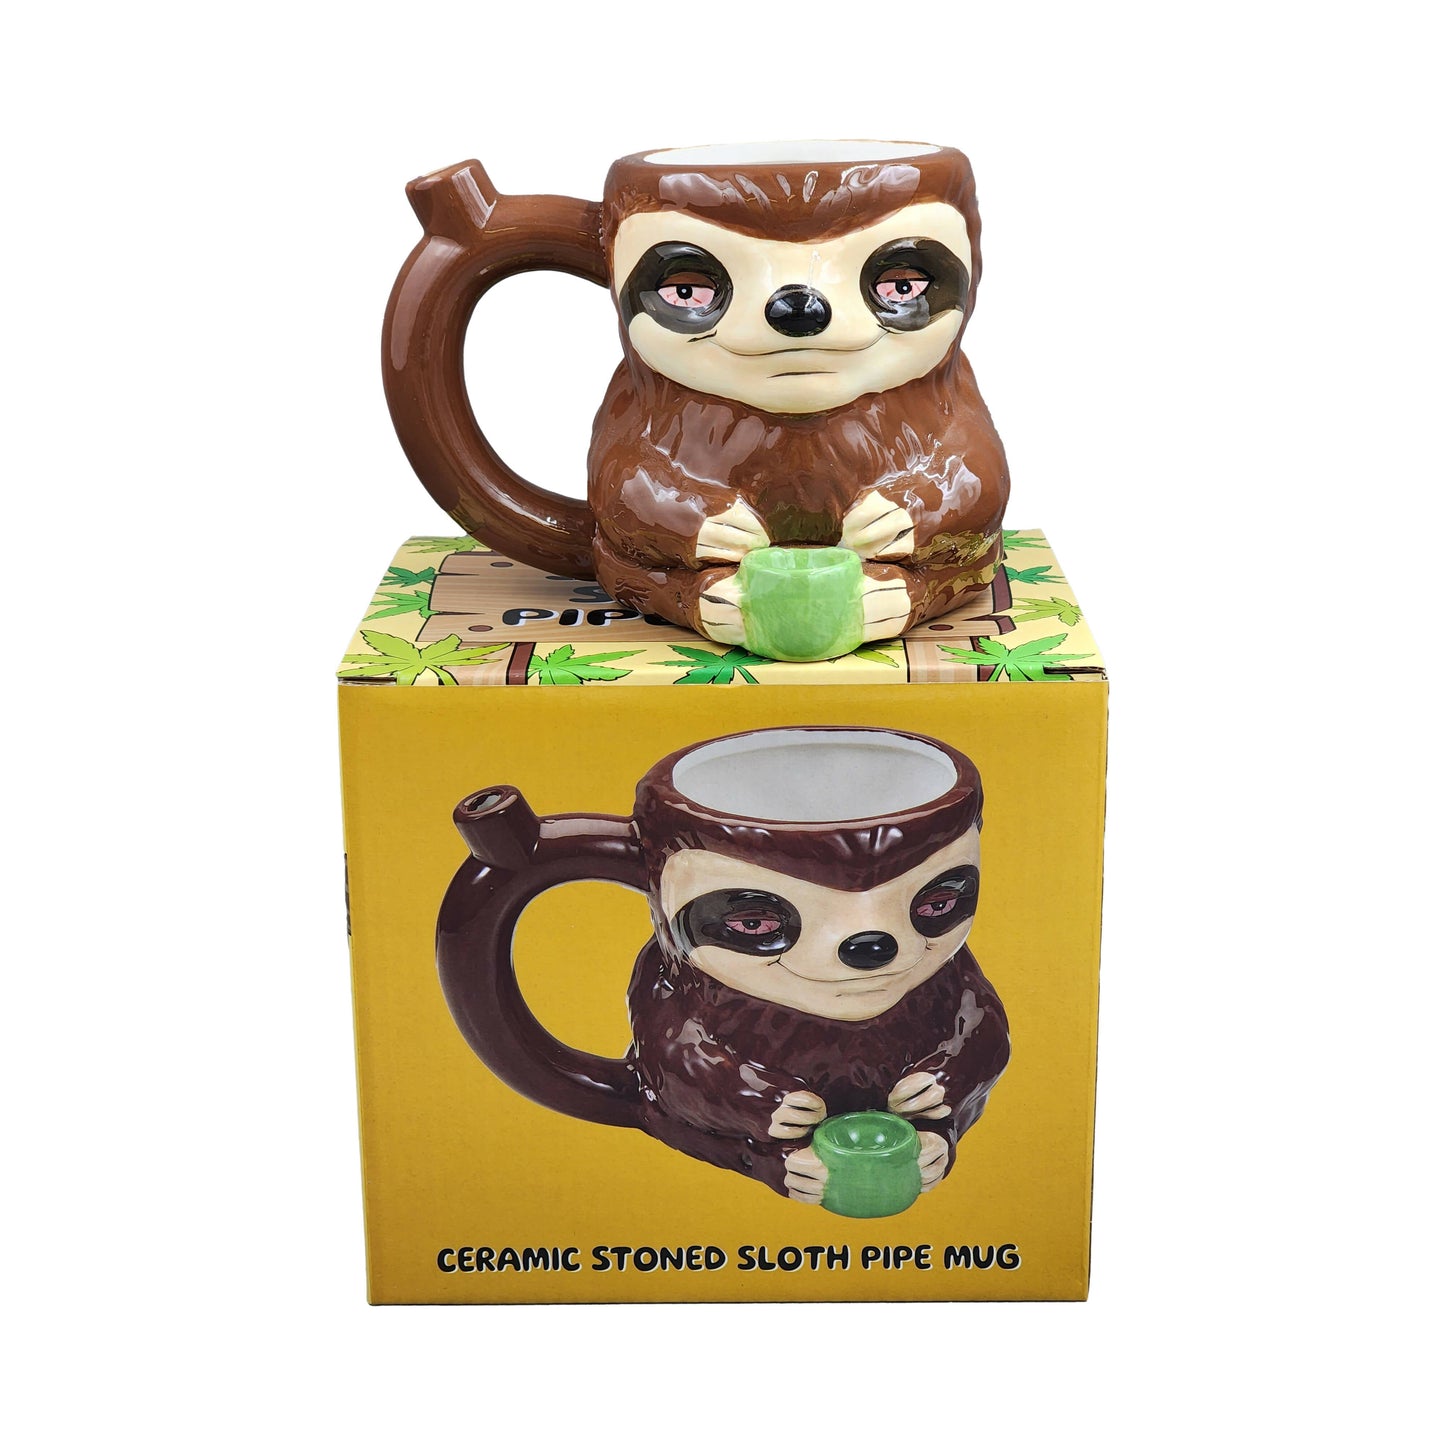 Stoned sloth mug pipe_8